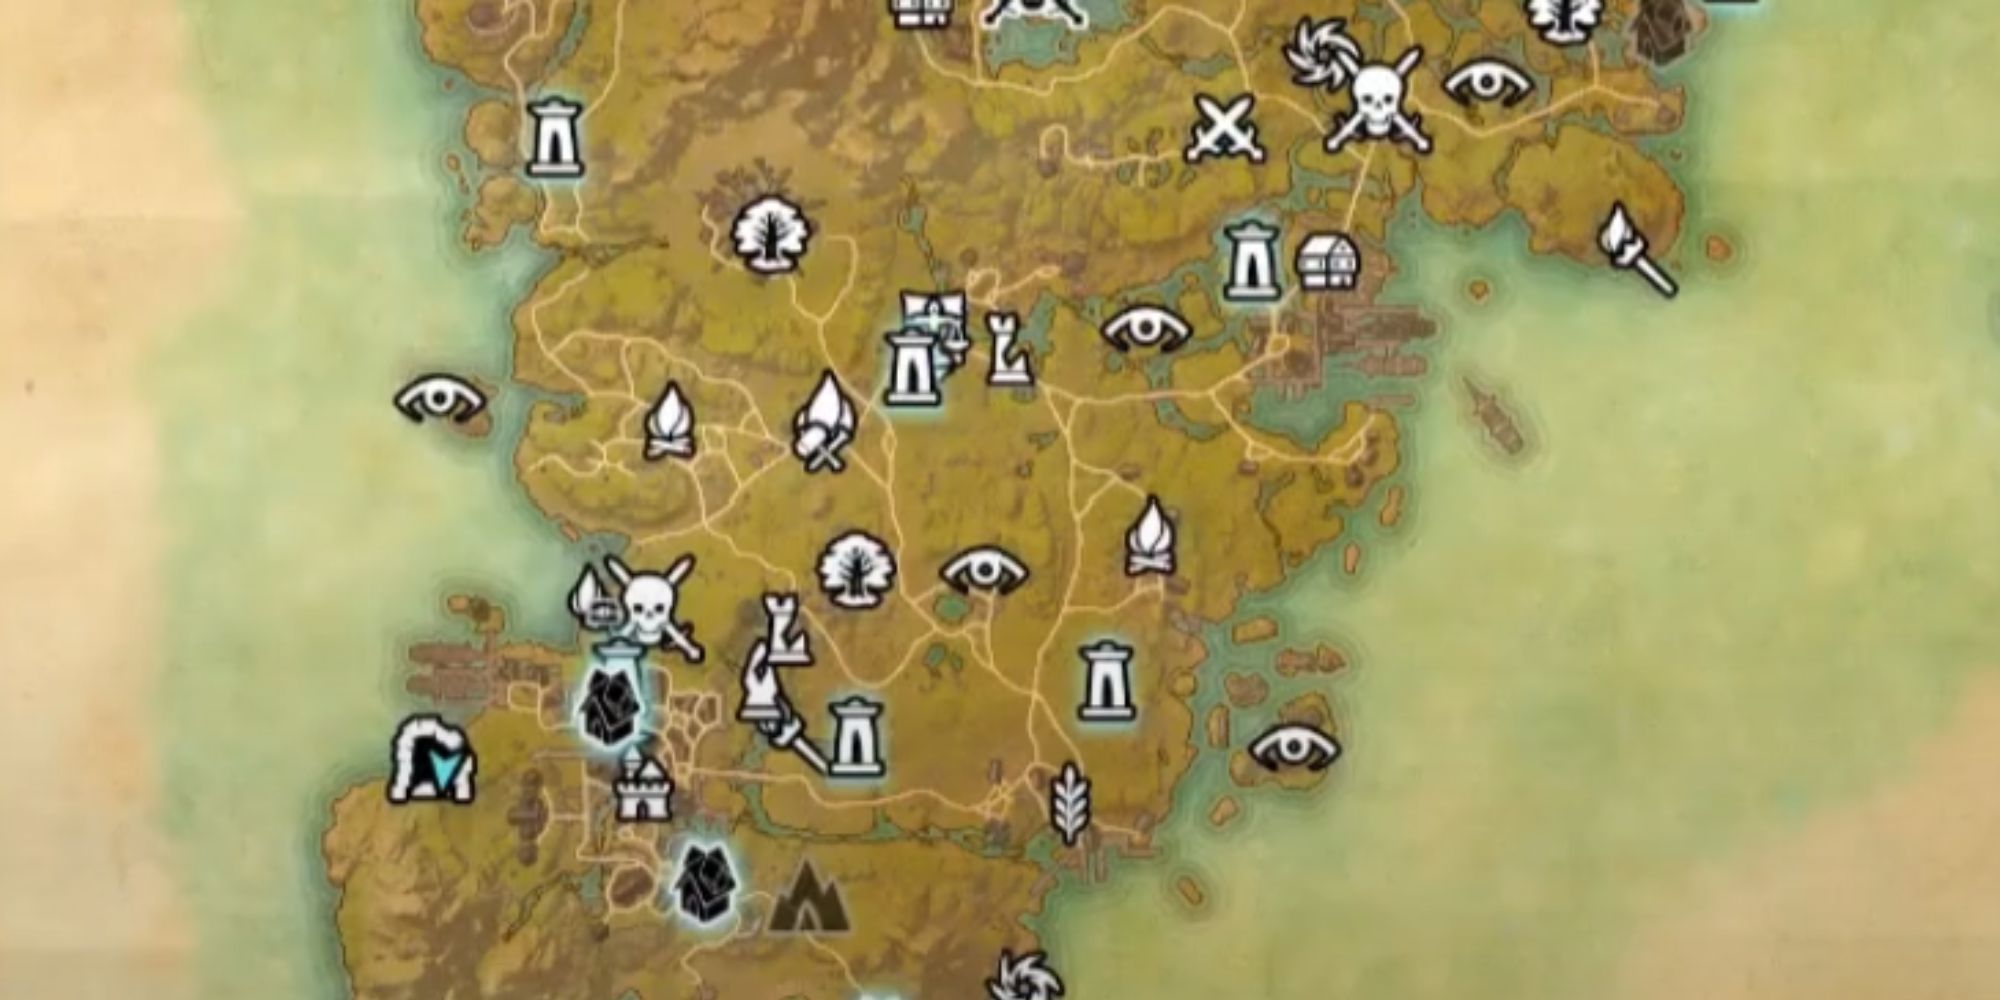 Elder Scrolls Online Bad Man's Hollows Public Dungeon On The Map